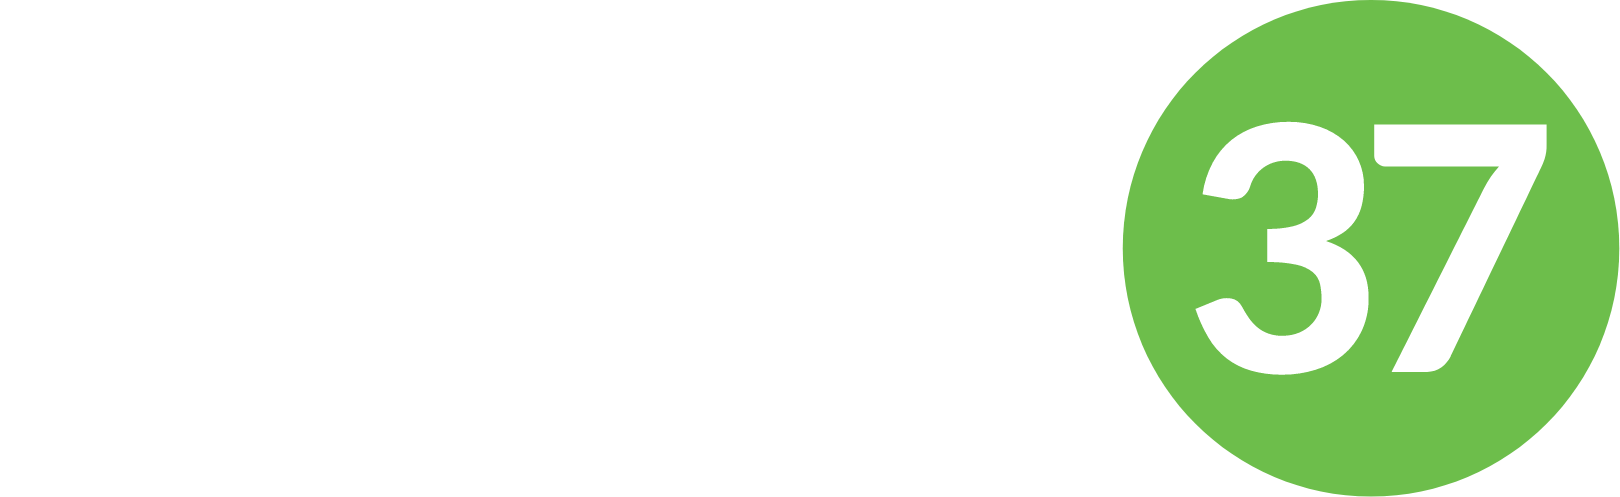 Science 37 Logo groß für dunkle Hintergründe (transparentes PNG)